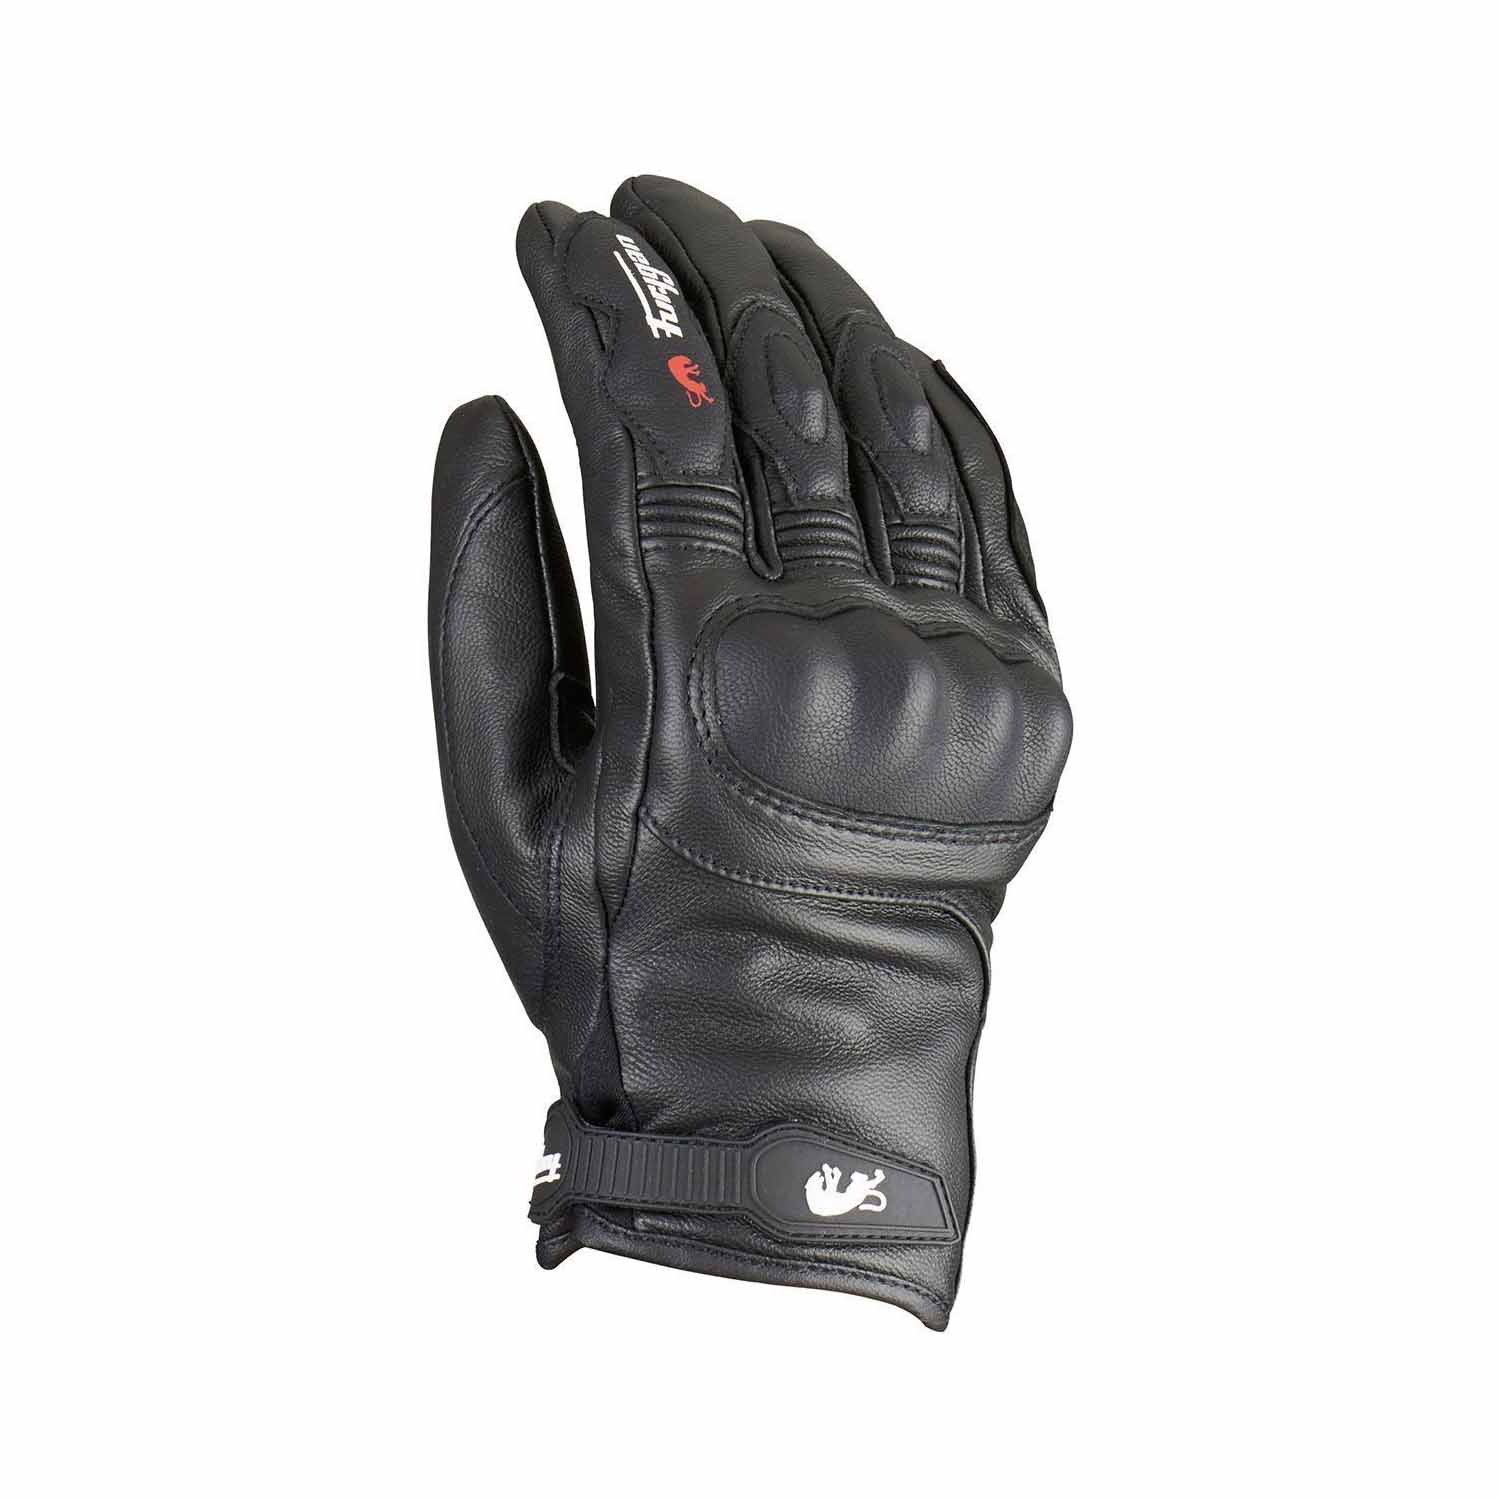 Image of Furygan Gloves TD21 All Season Evo Black Size S ID 3435980328474